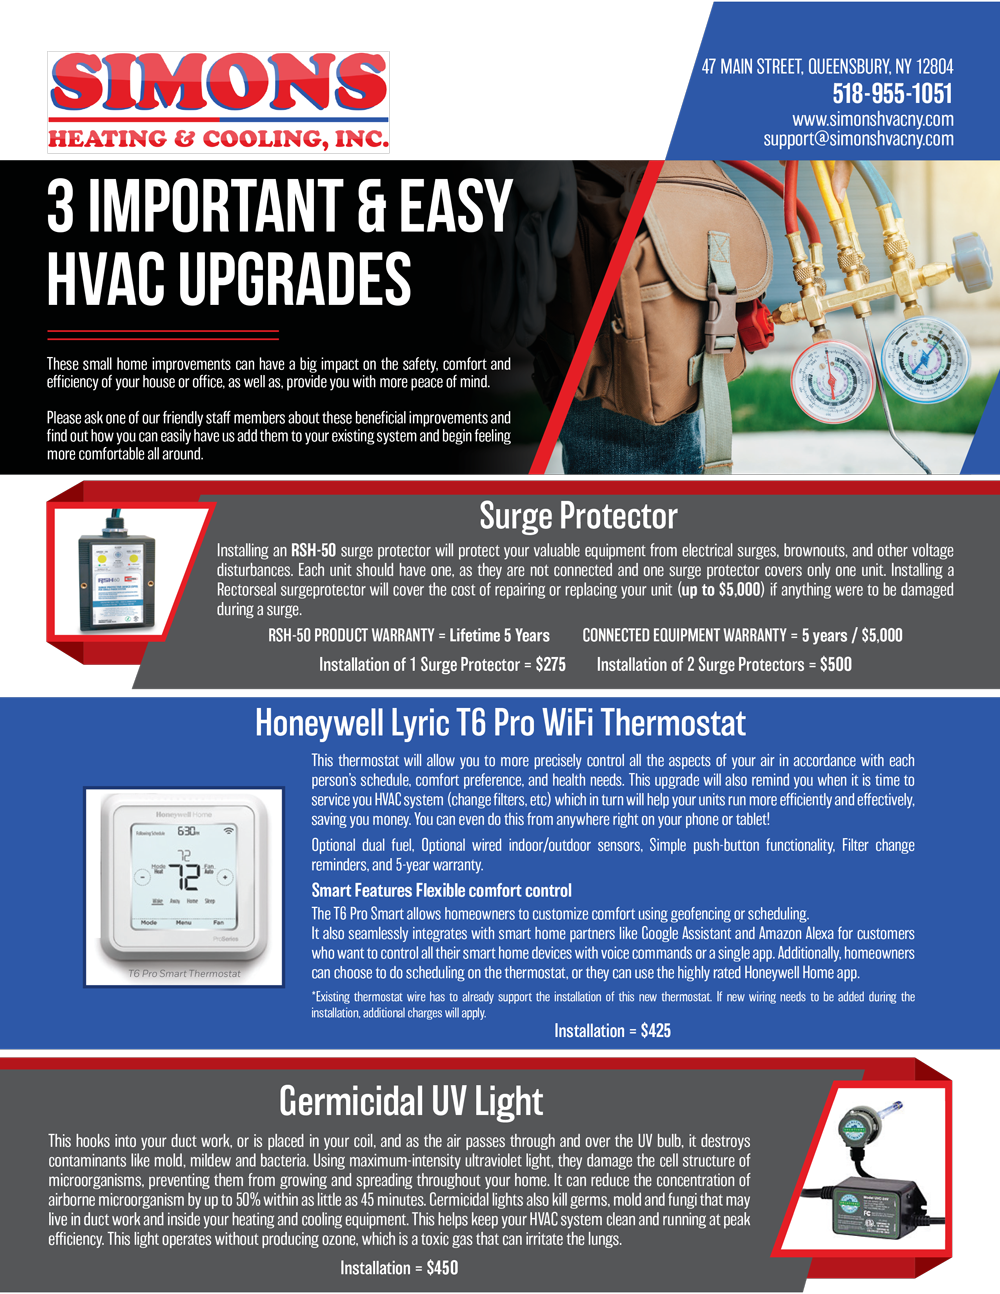 Simons Handout - 3 Important HVAC Upgrades Tips